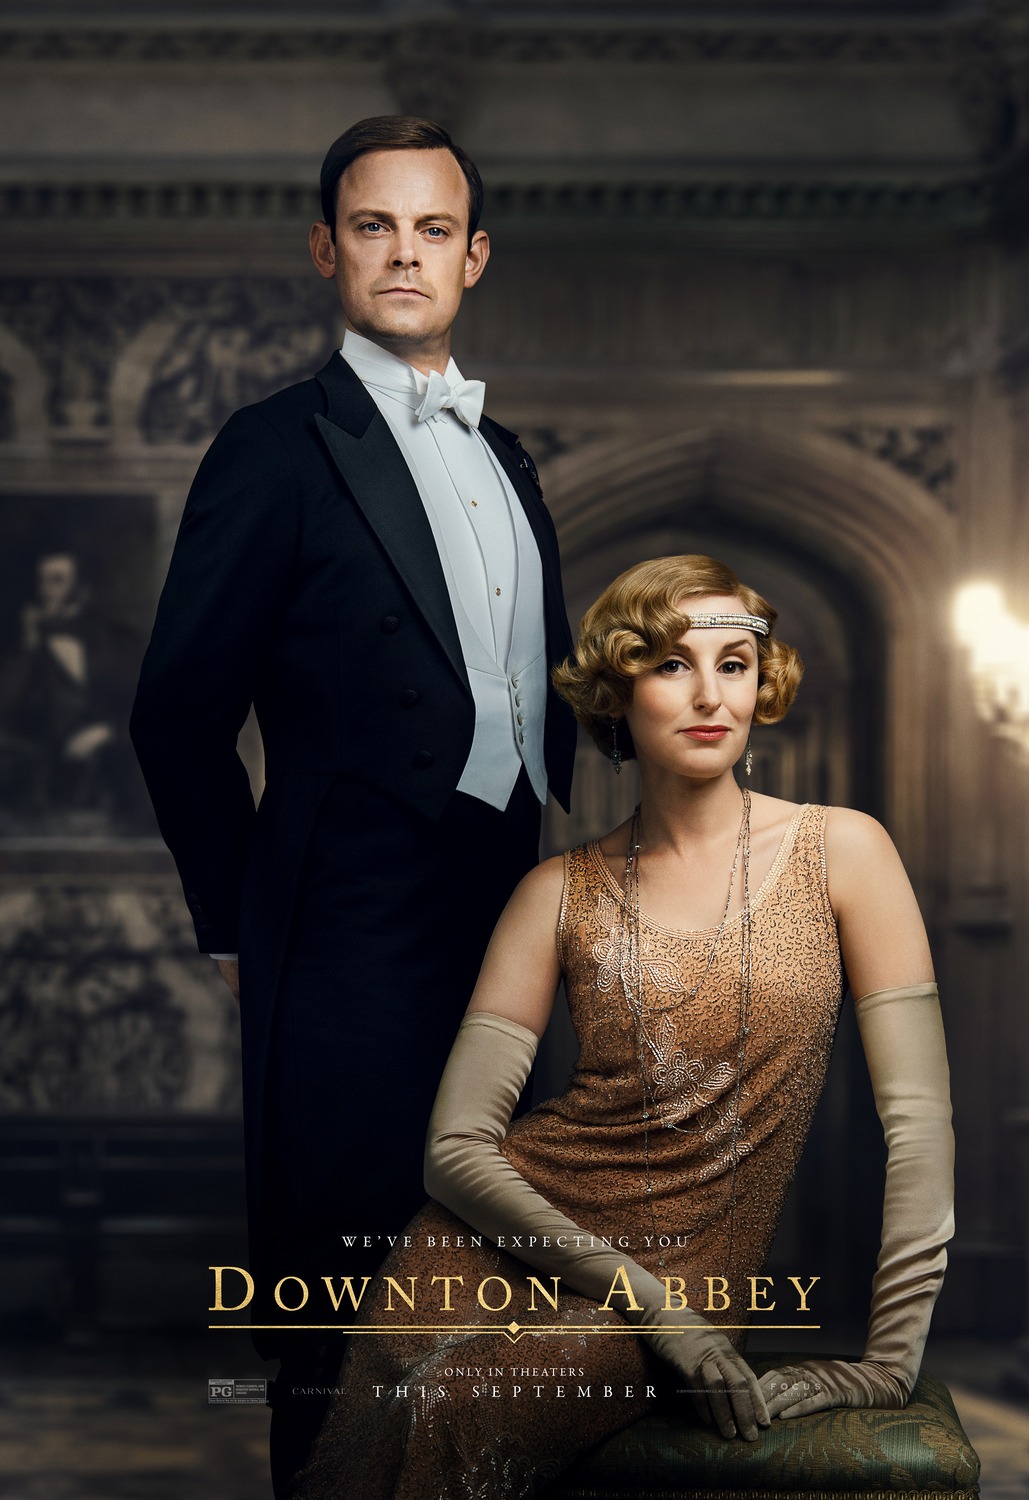 Downton Abbey (#18 of 32): Extra Large Movie Poster Image - IMP Awards